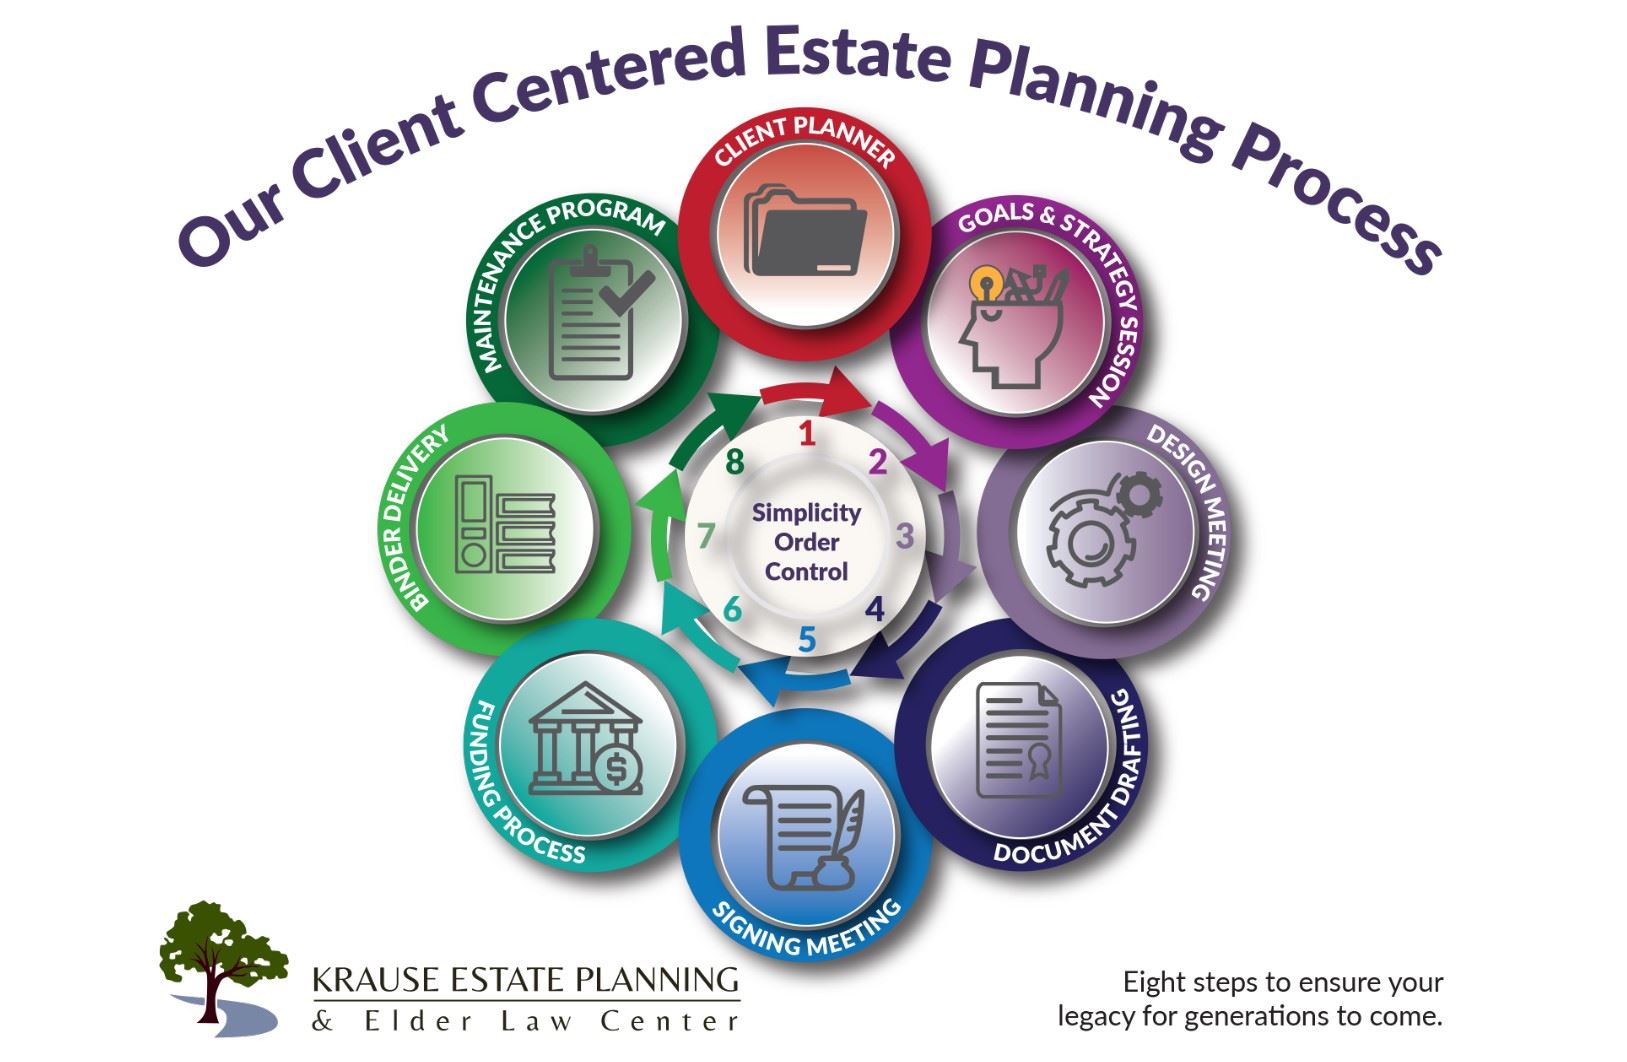 Our client centered estate planning process at Krause Estate Planning & Elder Law Center